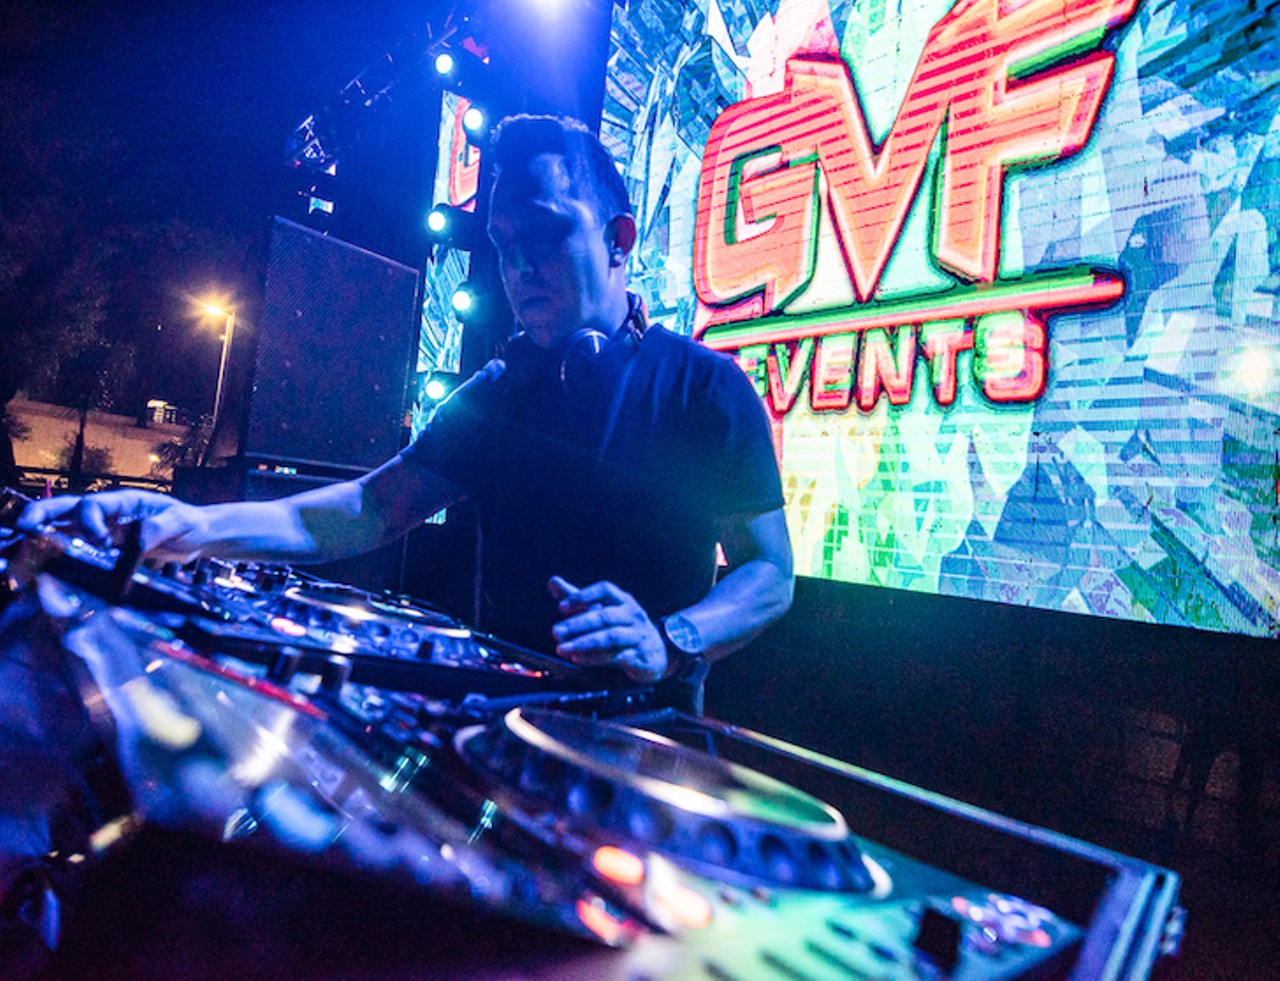 Trailblazing DJ Paul Oakenfold spun an entrancing outdoor set in downtown Orlando